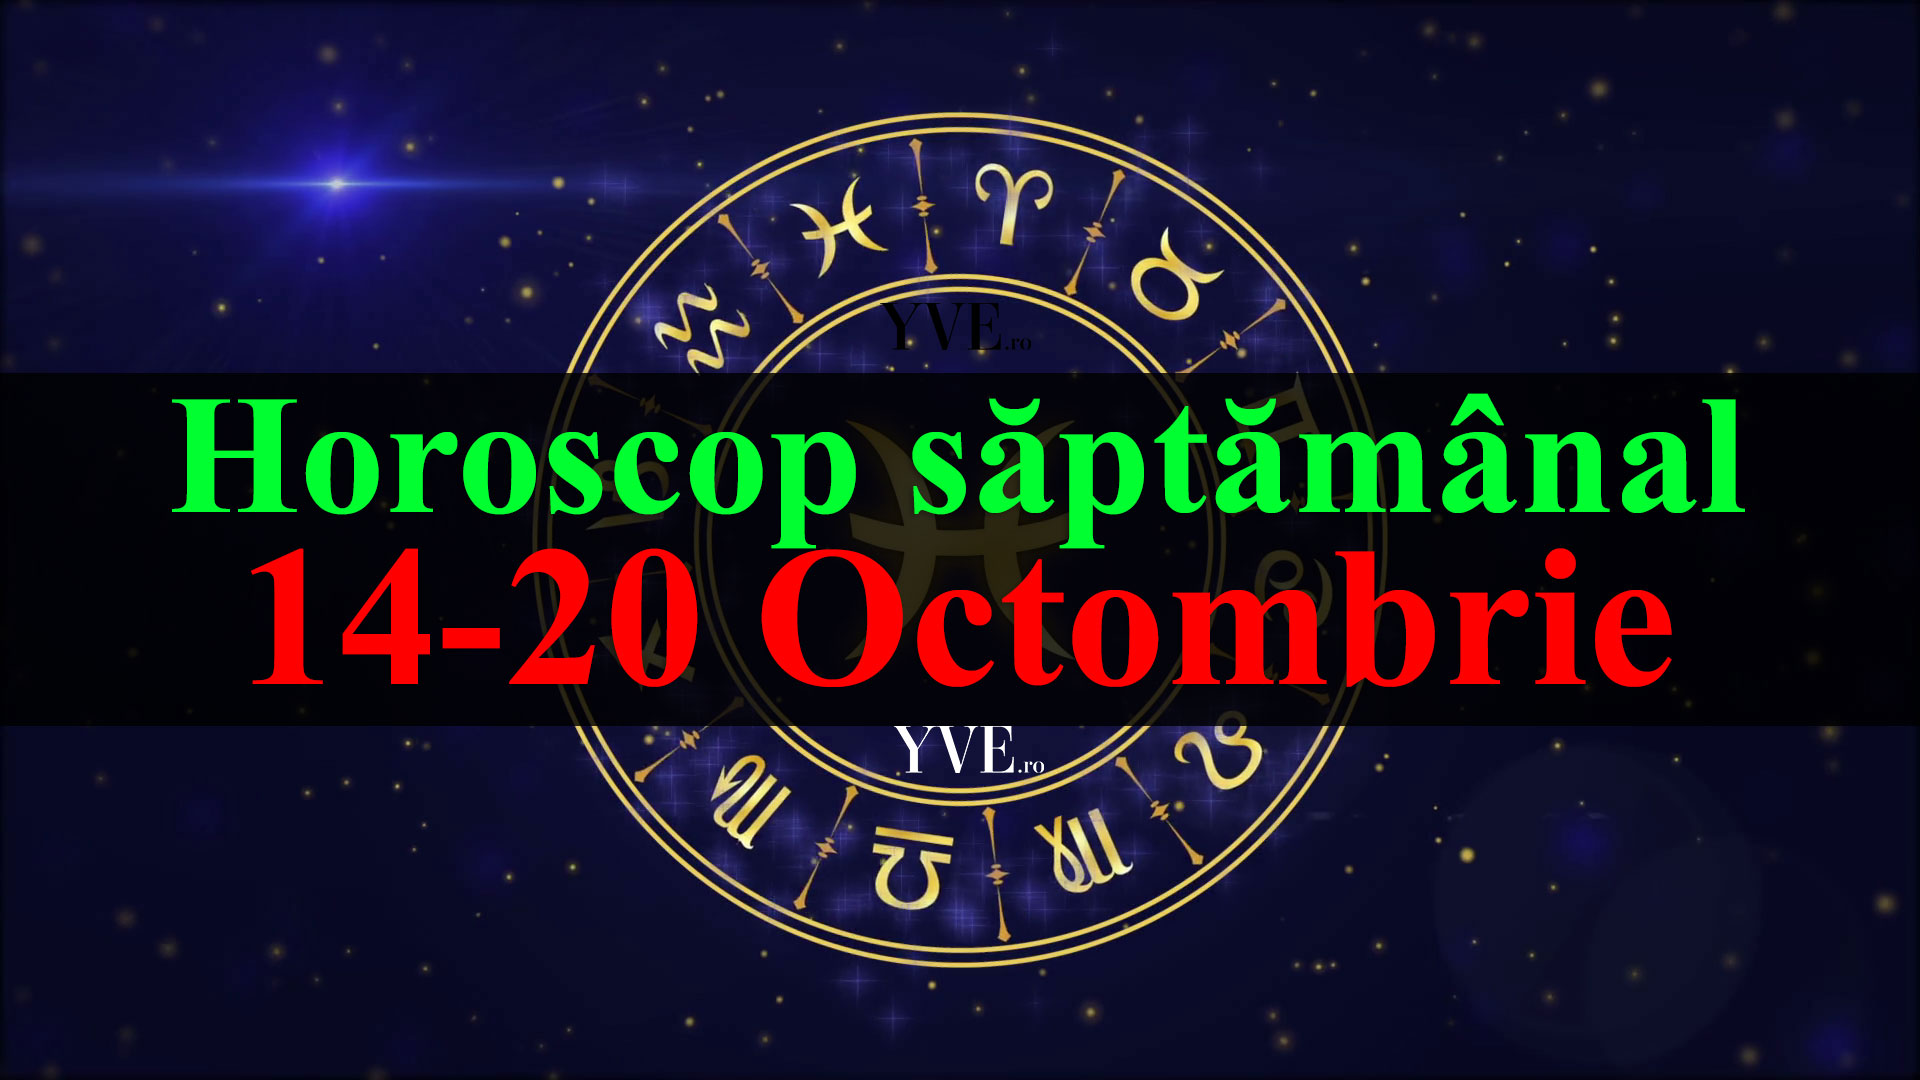 Horoscop saptamanal 14-20 Octombrie 2019